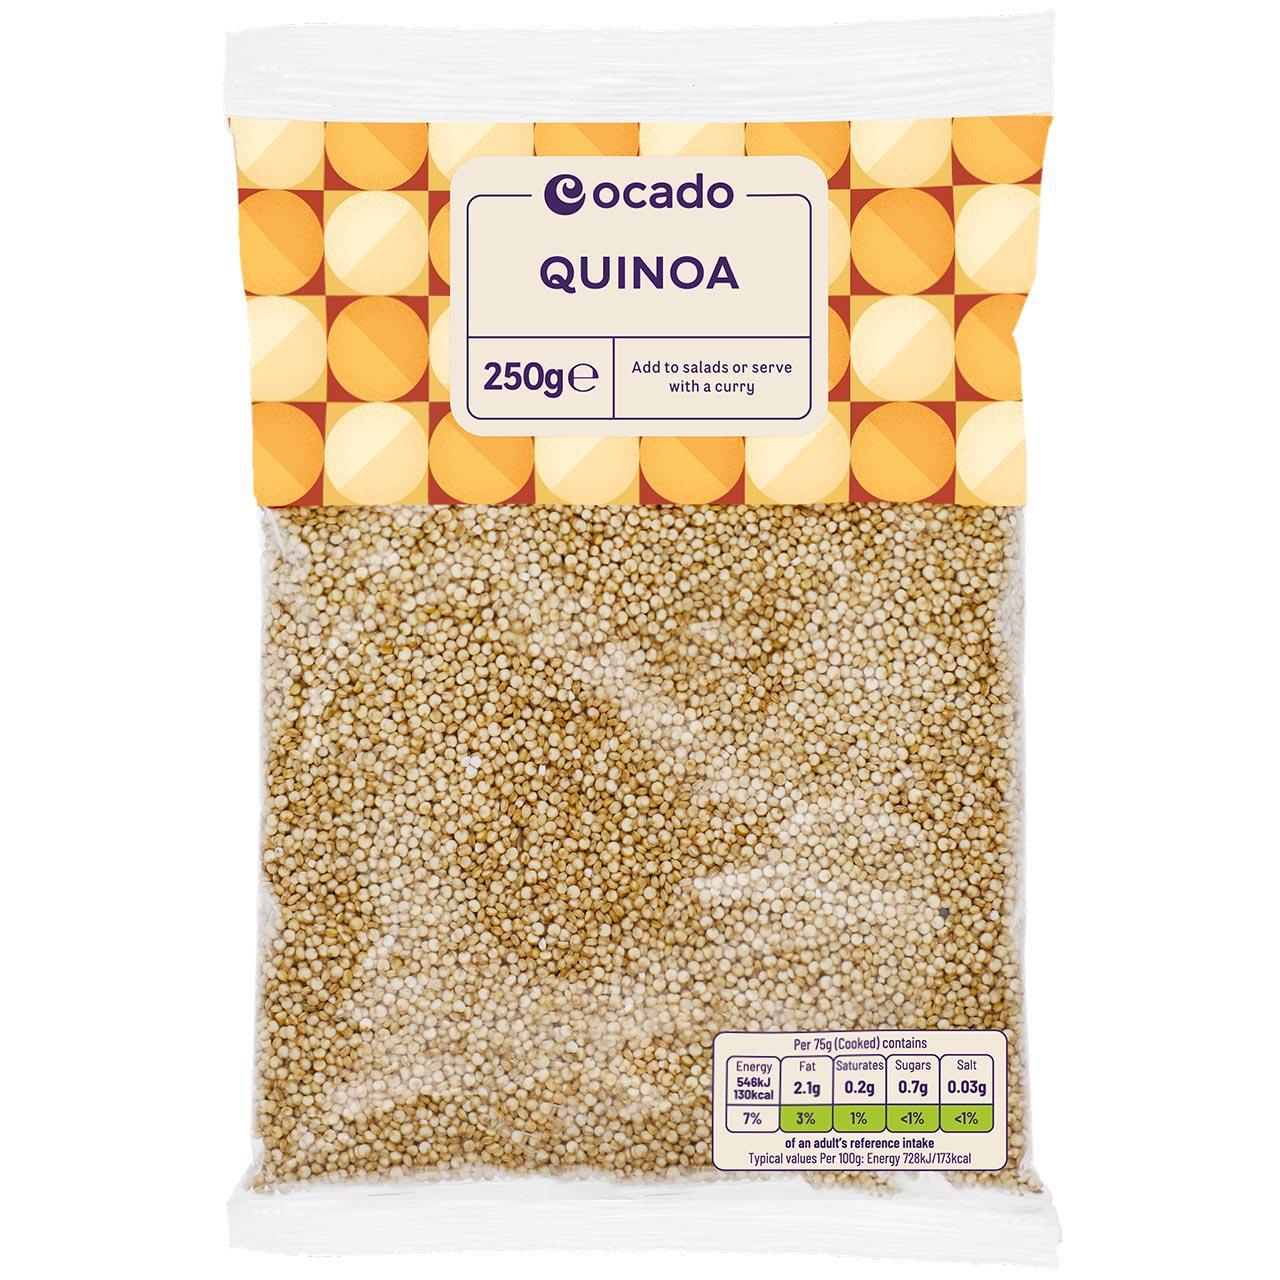 Ocado Quinoa 250g